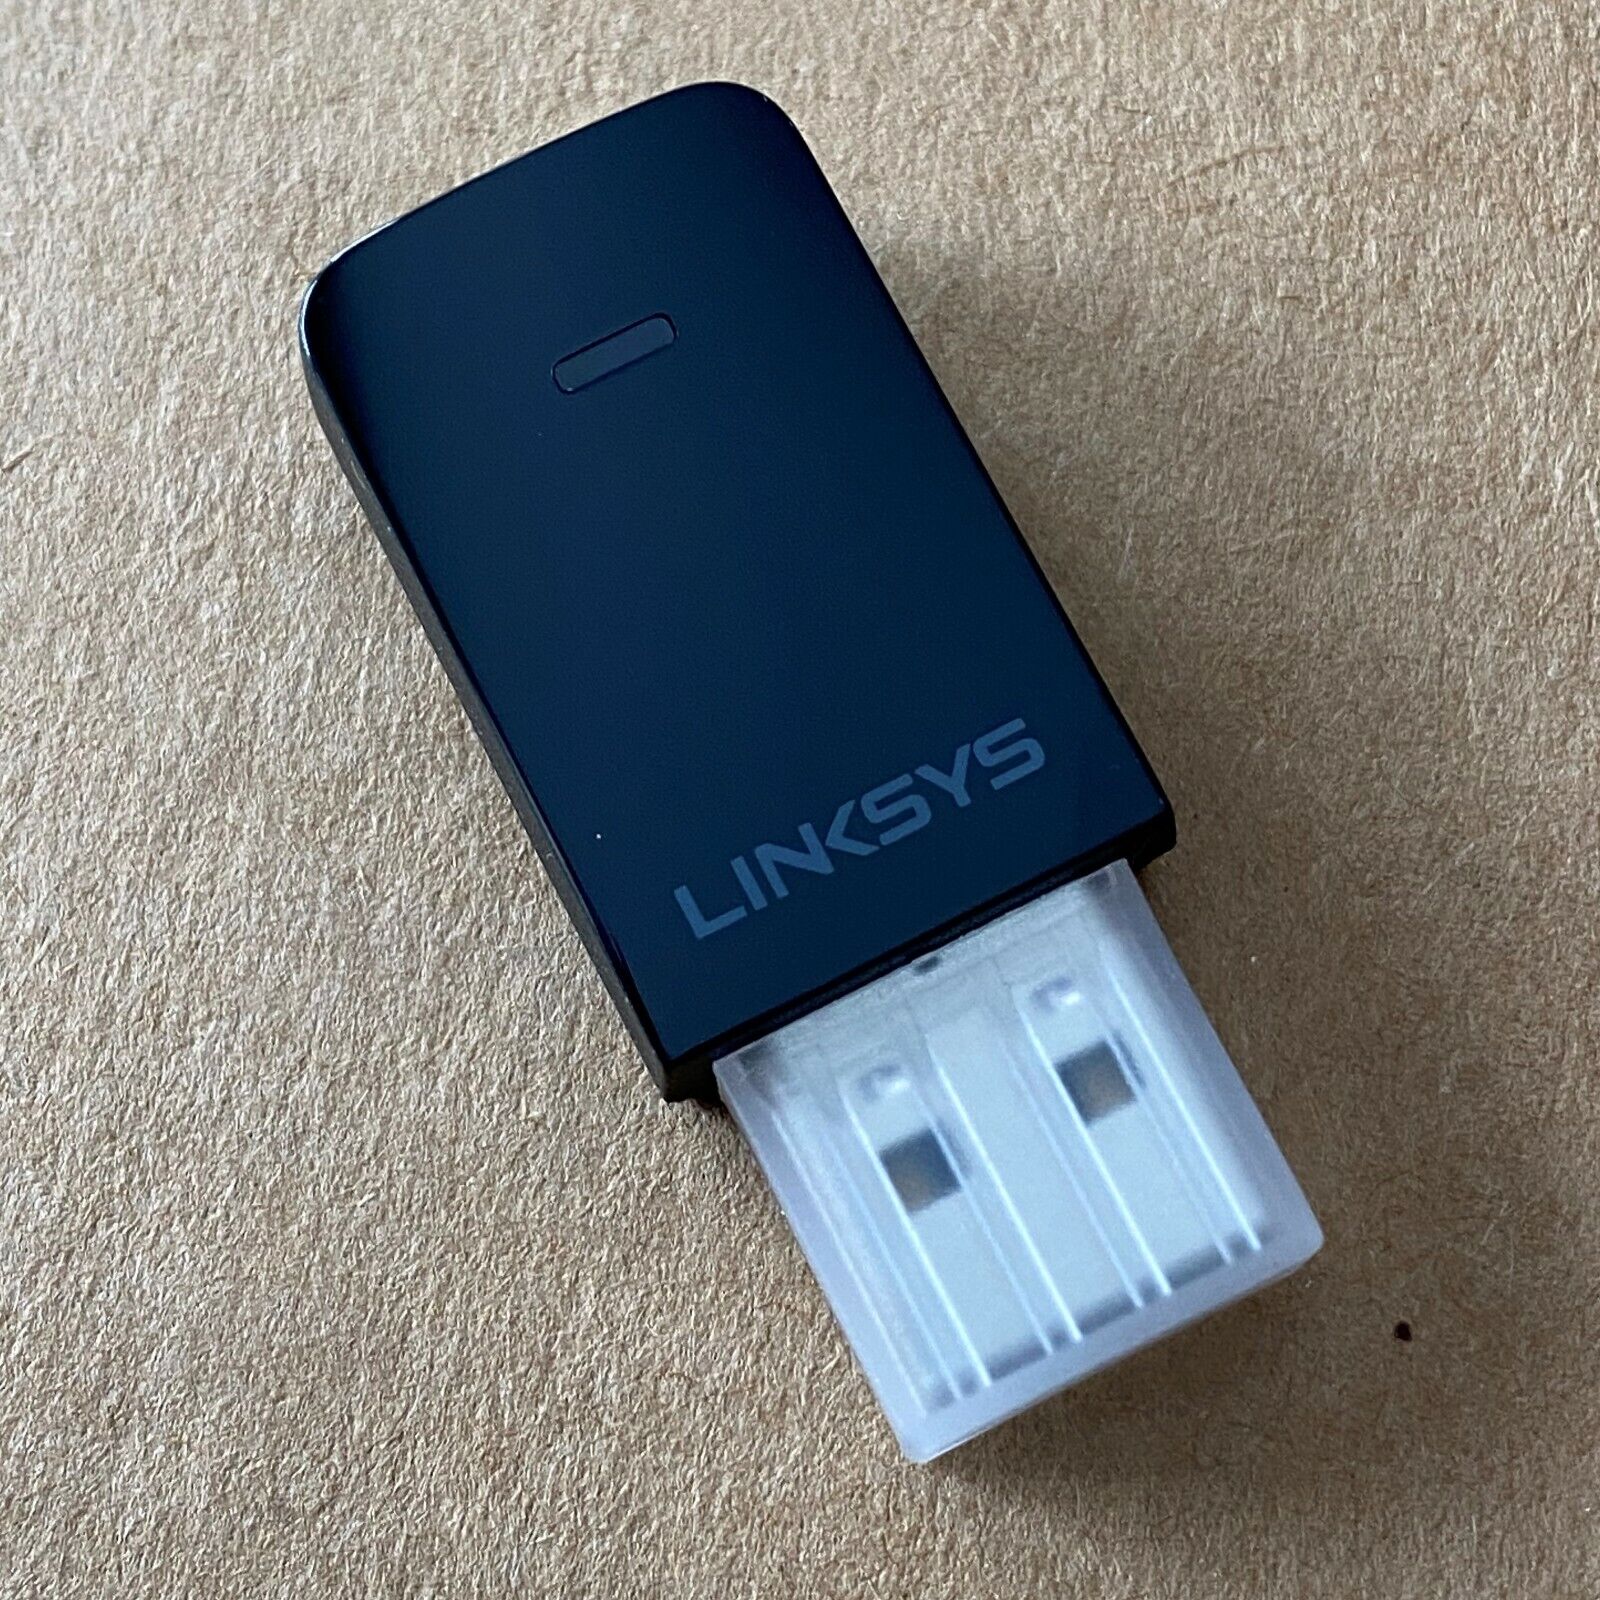 NEW Linksys Max-Stream Compact USB Adapter (Model WUSB6100M) AC600 Wi-Fi 5